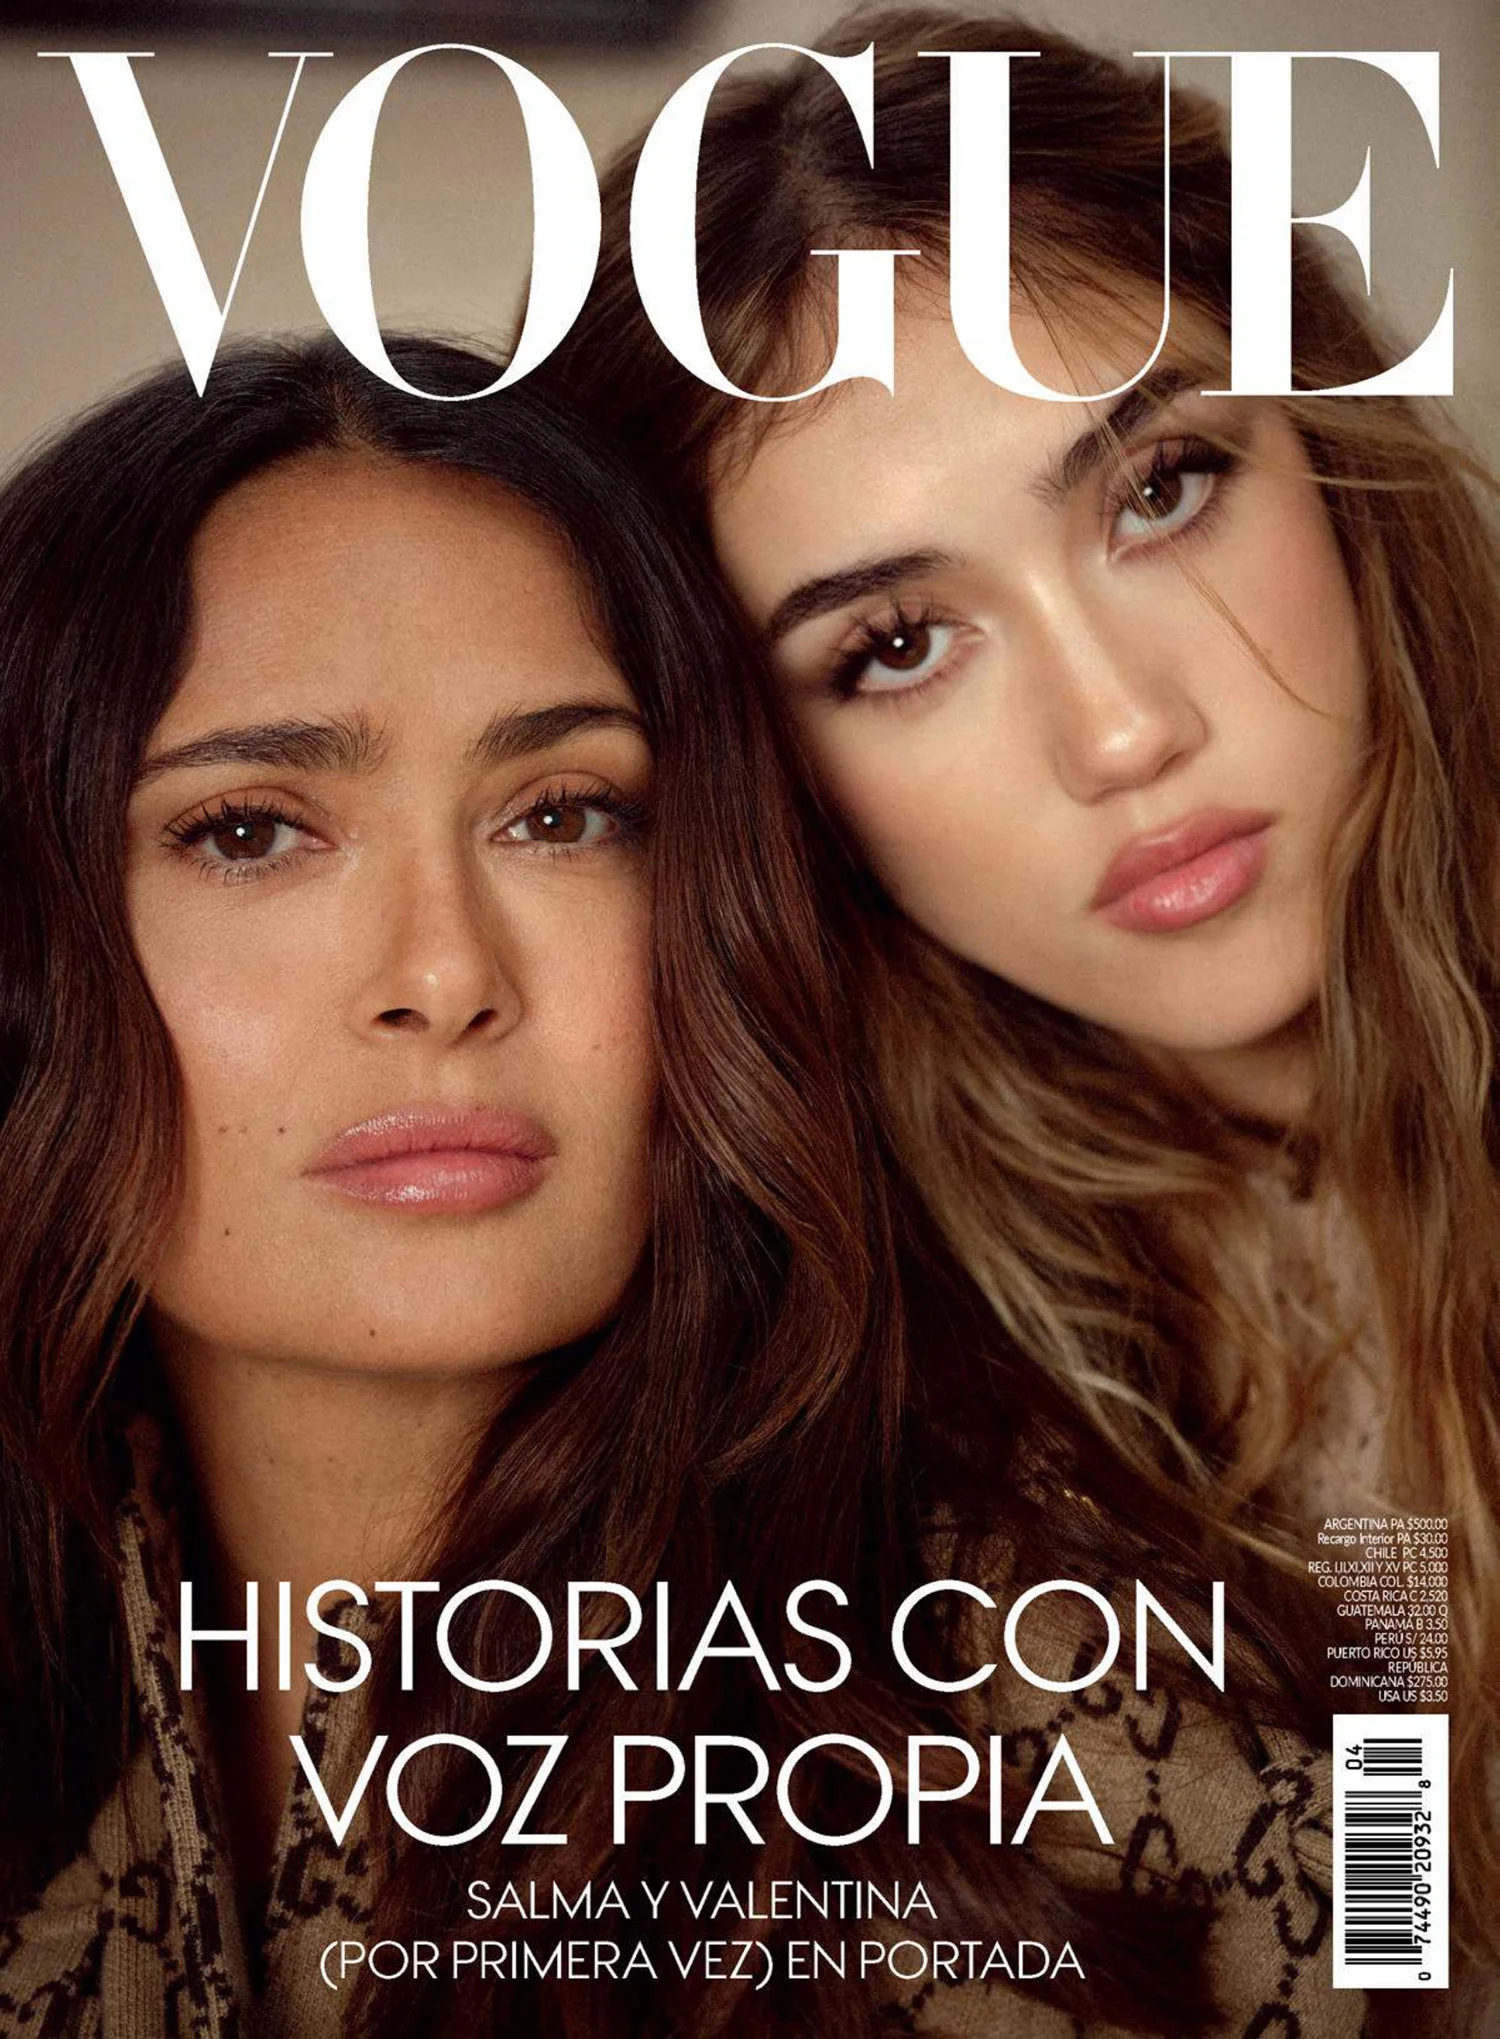 Salma Hayek and Valentina Paloma Pinault cover Vogue Mexico & Latin America May 2022 by Nico Bustos